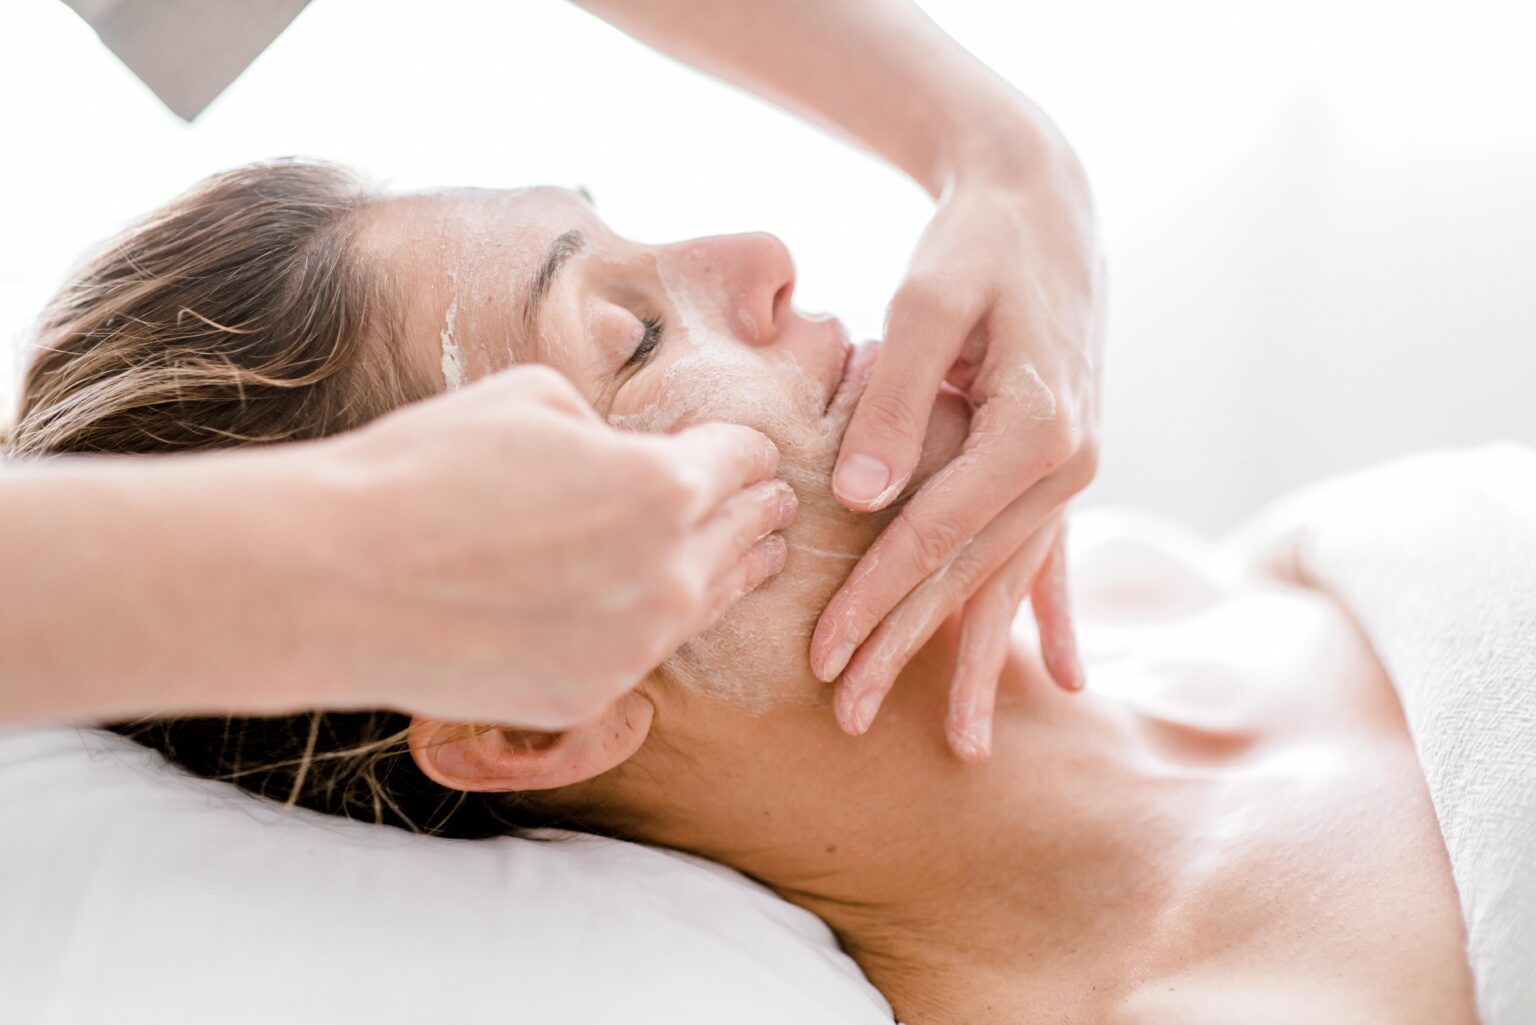 Woman-having-a-relaxing-facial-treatment-at-a-spa